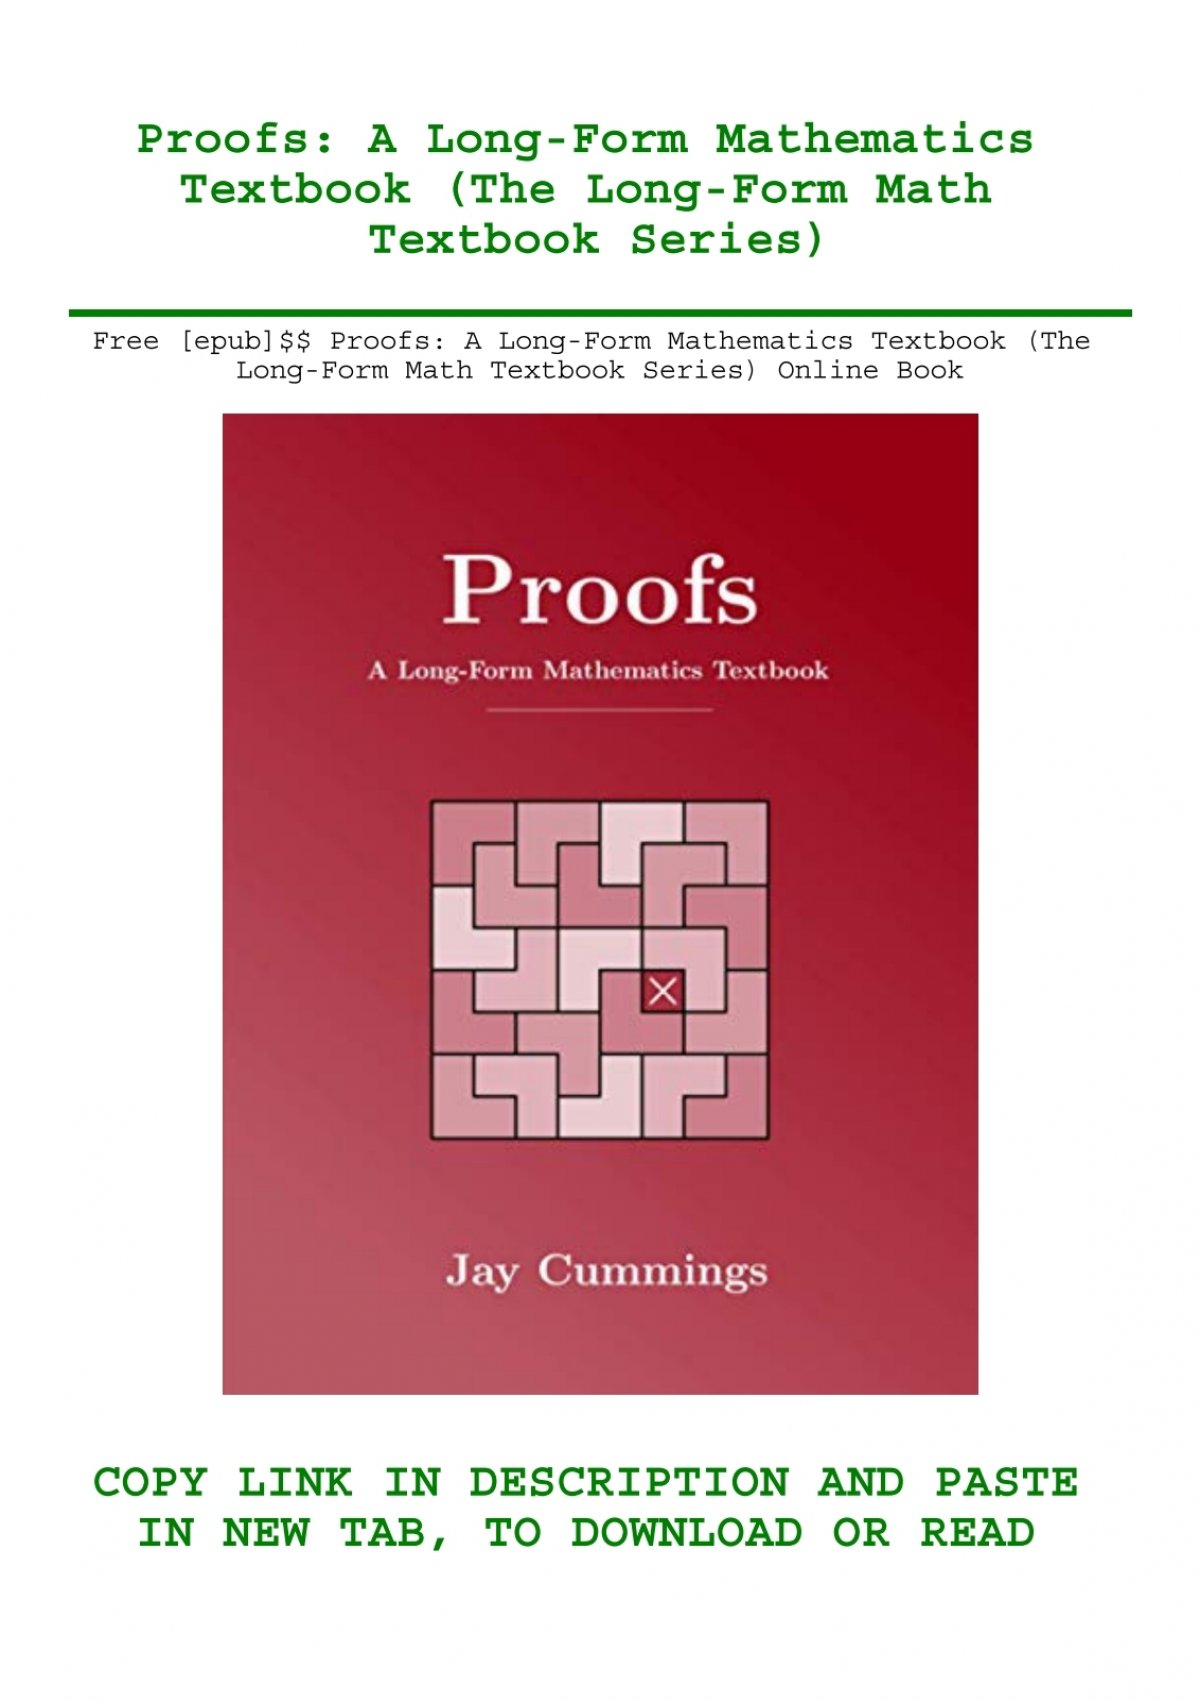 free-epub-proofs-a-long-form-mathematics-textbook-the-long-form